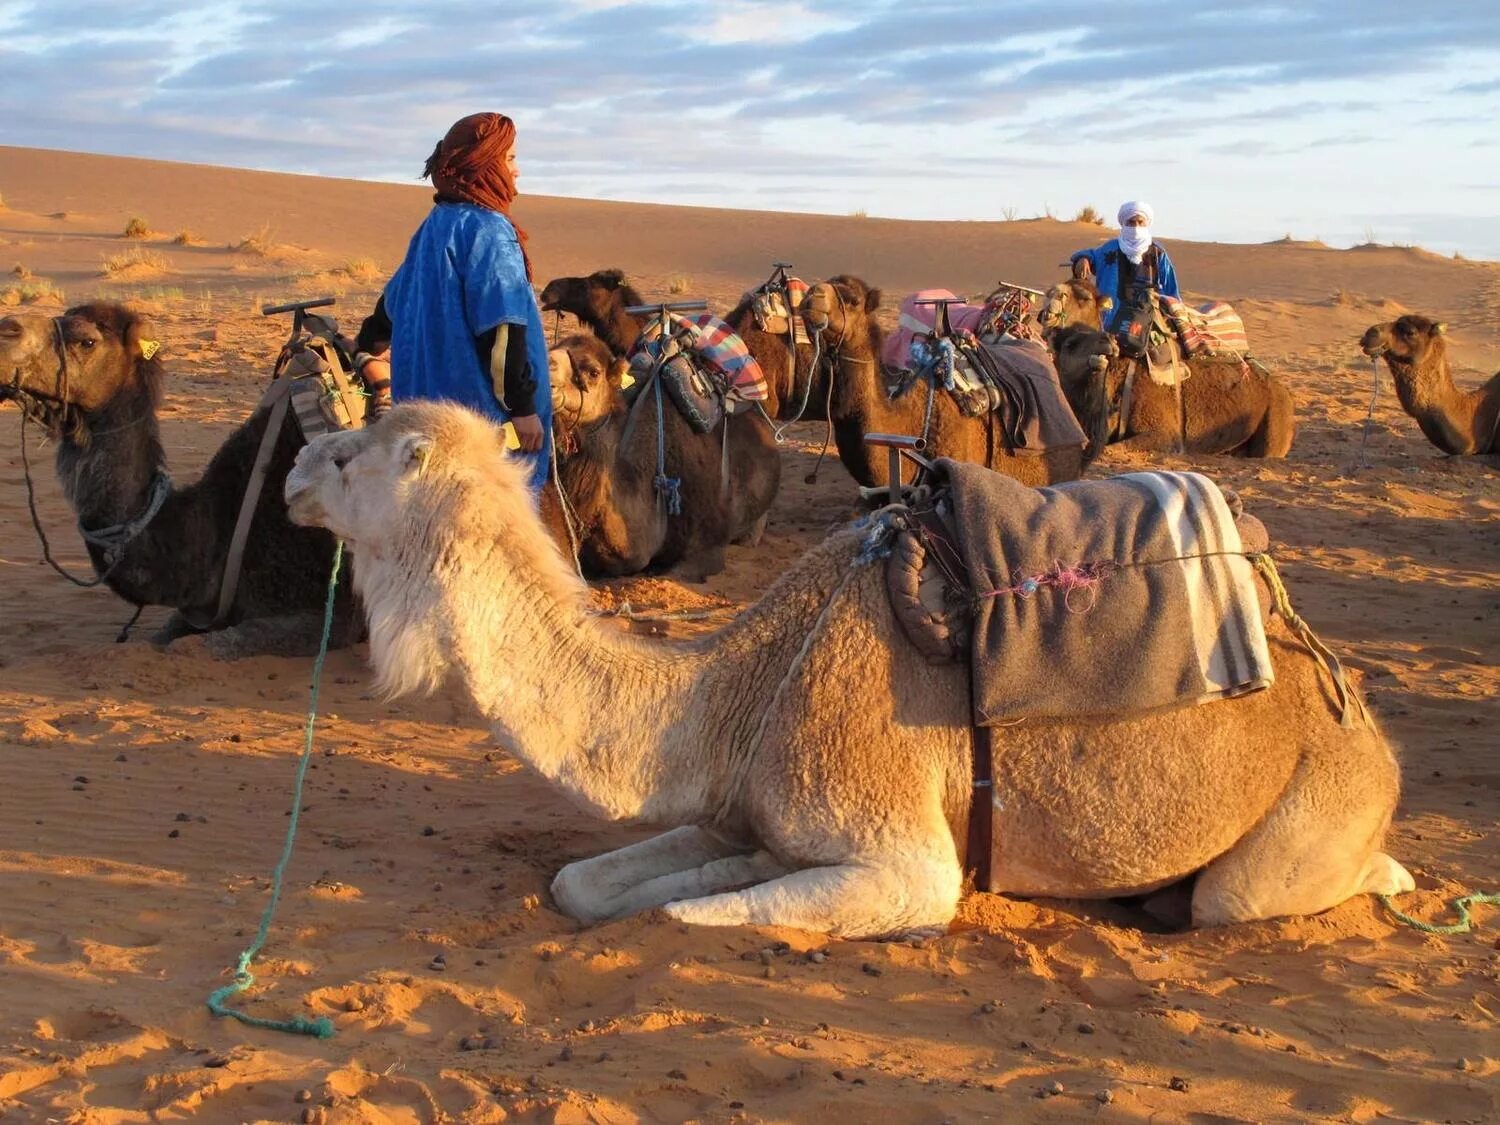 Караван картинка. Бедуины Марокко. Караван в пустыне Каракум. Караваны верблюдов с бедуинами. Караван марокканских верблюдов дромедаров.